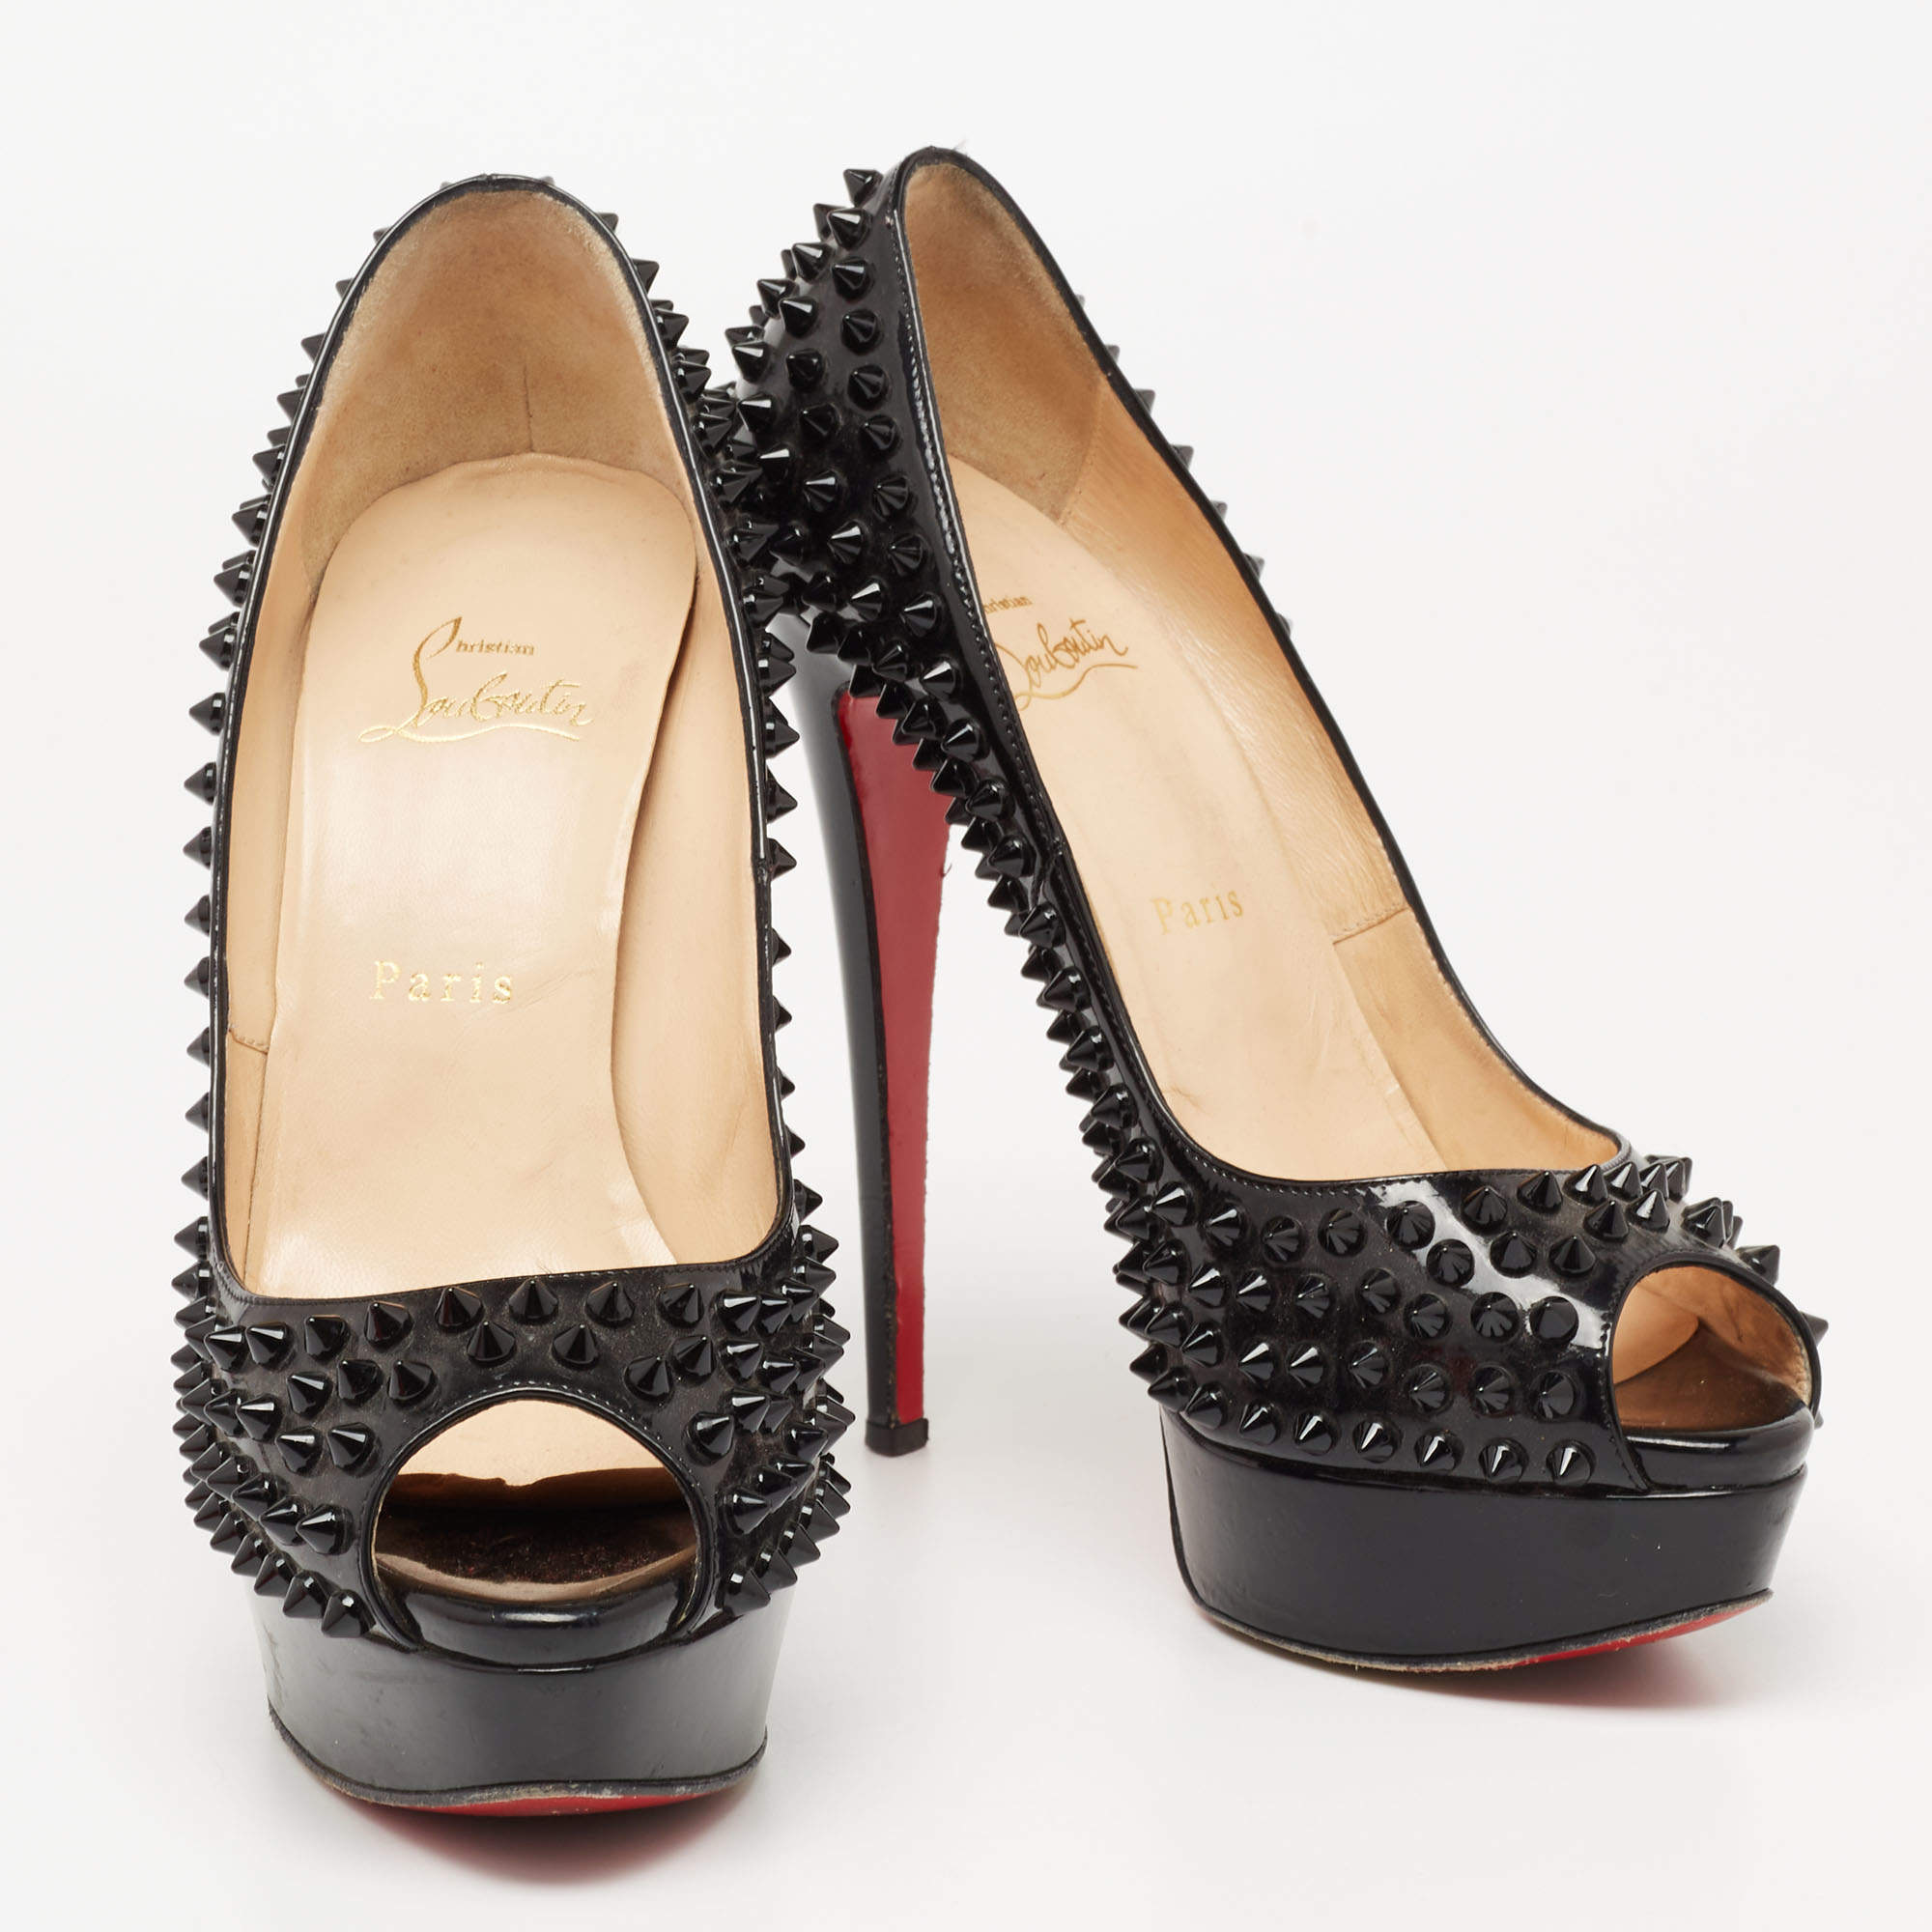 Auth Christian Louboutin black patent Lady Peep platform open toe pump heels  35